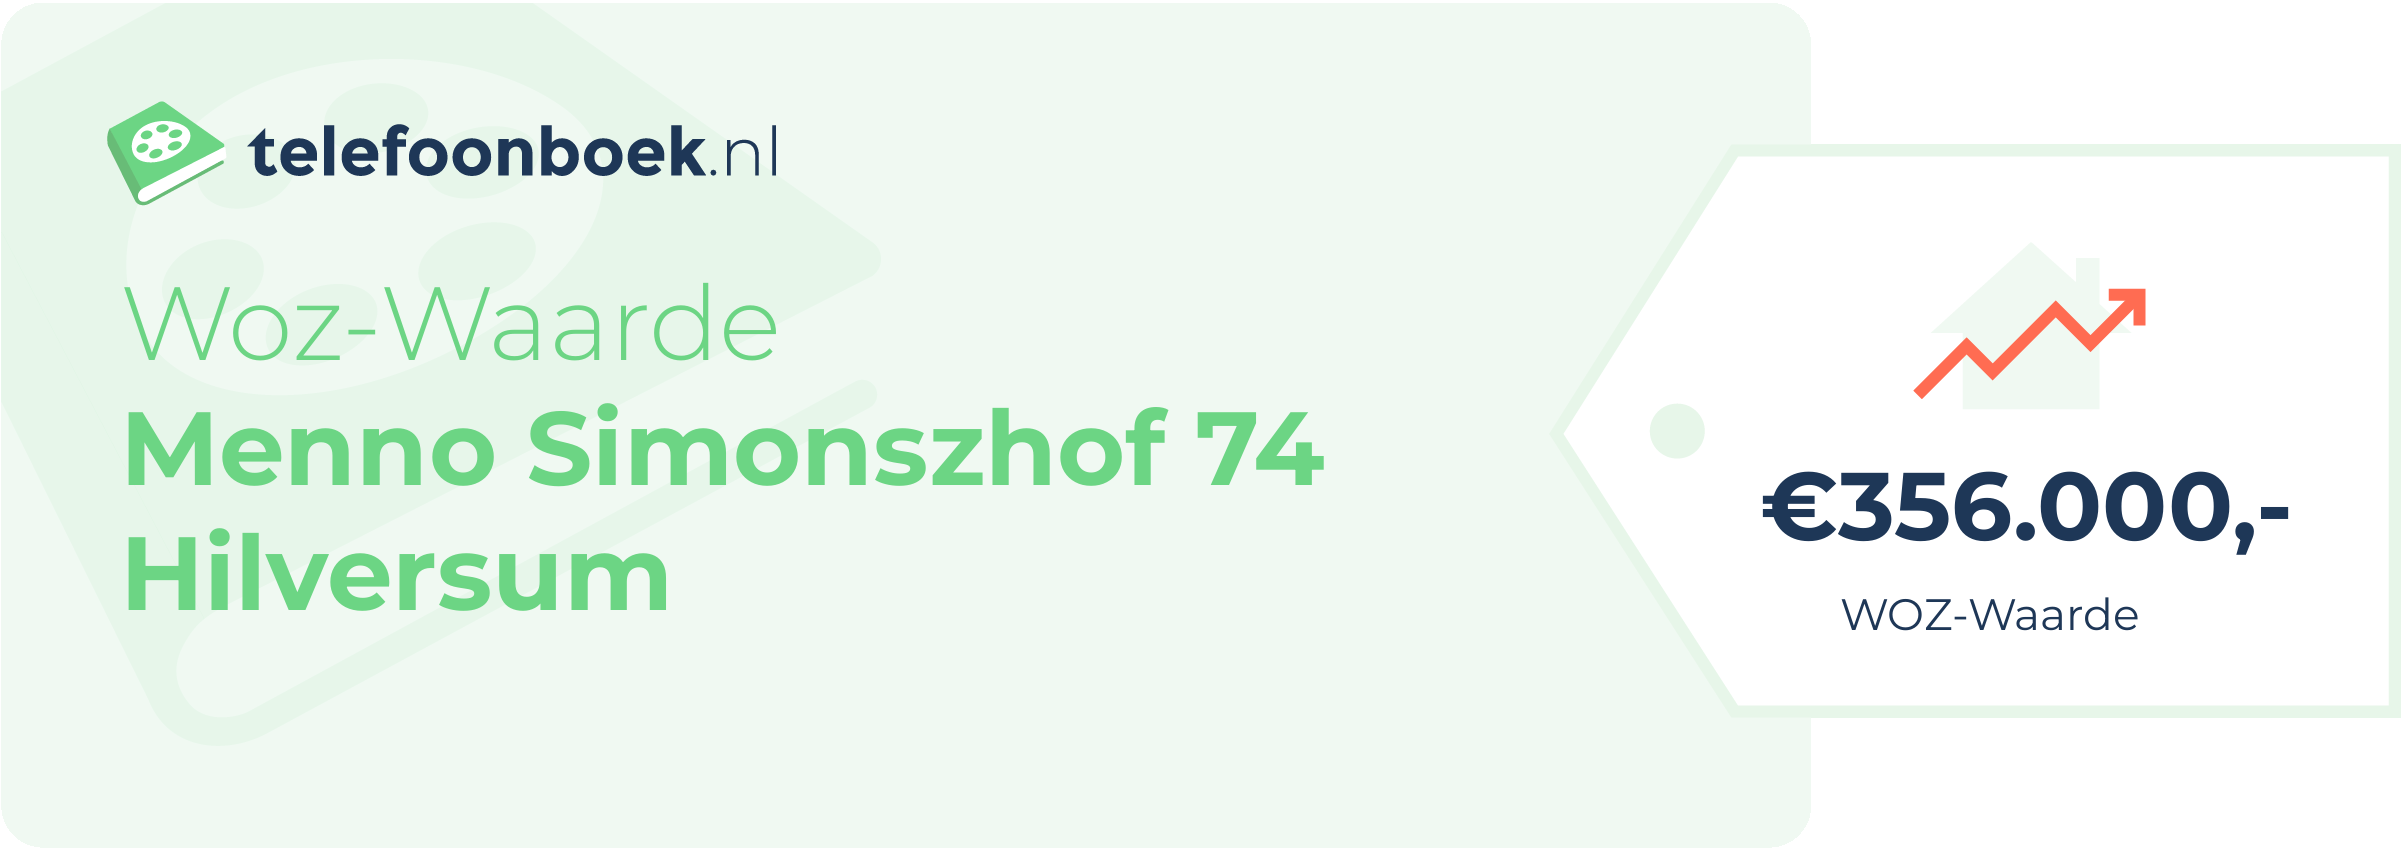 WOZ-waarde Menno Simonszhof 74 Hilversum